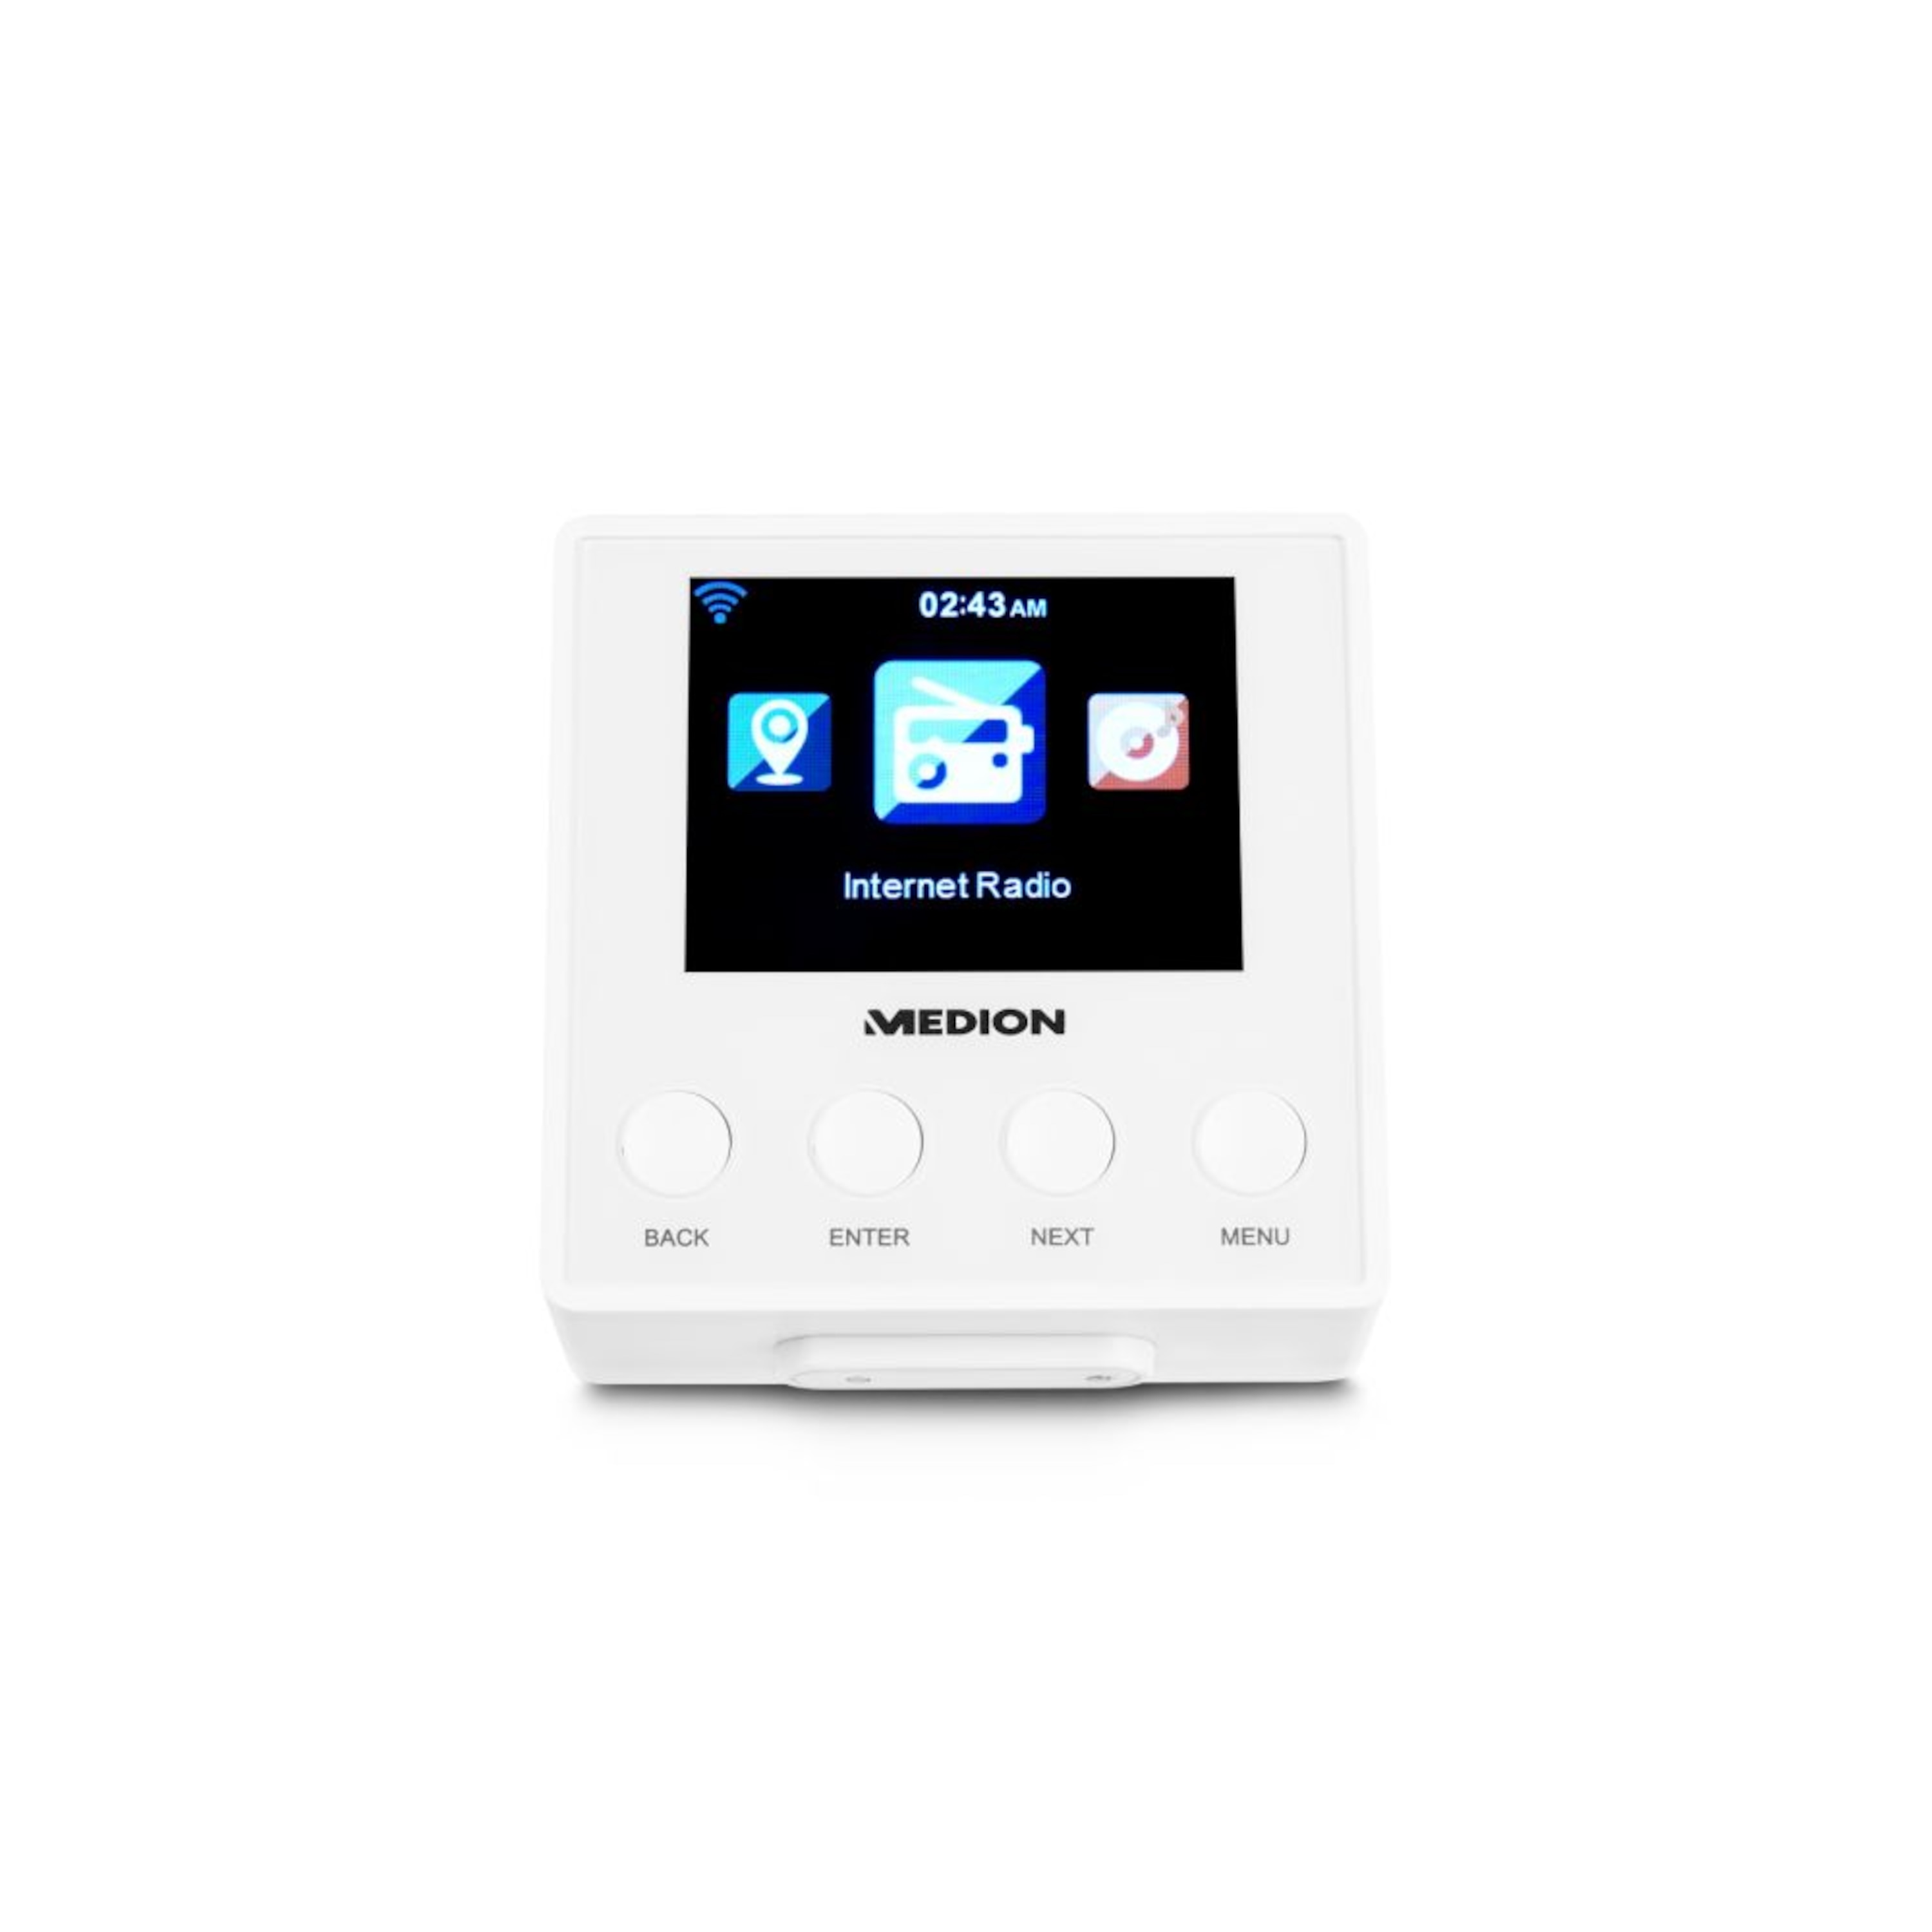 MEDION® E85032 Steckdosen Internetradio, 6,1 cm/2,4" TFT Farbdisplay, Steuerung per App, DLNA/UPnP kompatibel, WLAN und Bluetooth-Funktion   (B-Ware)